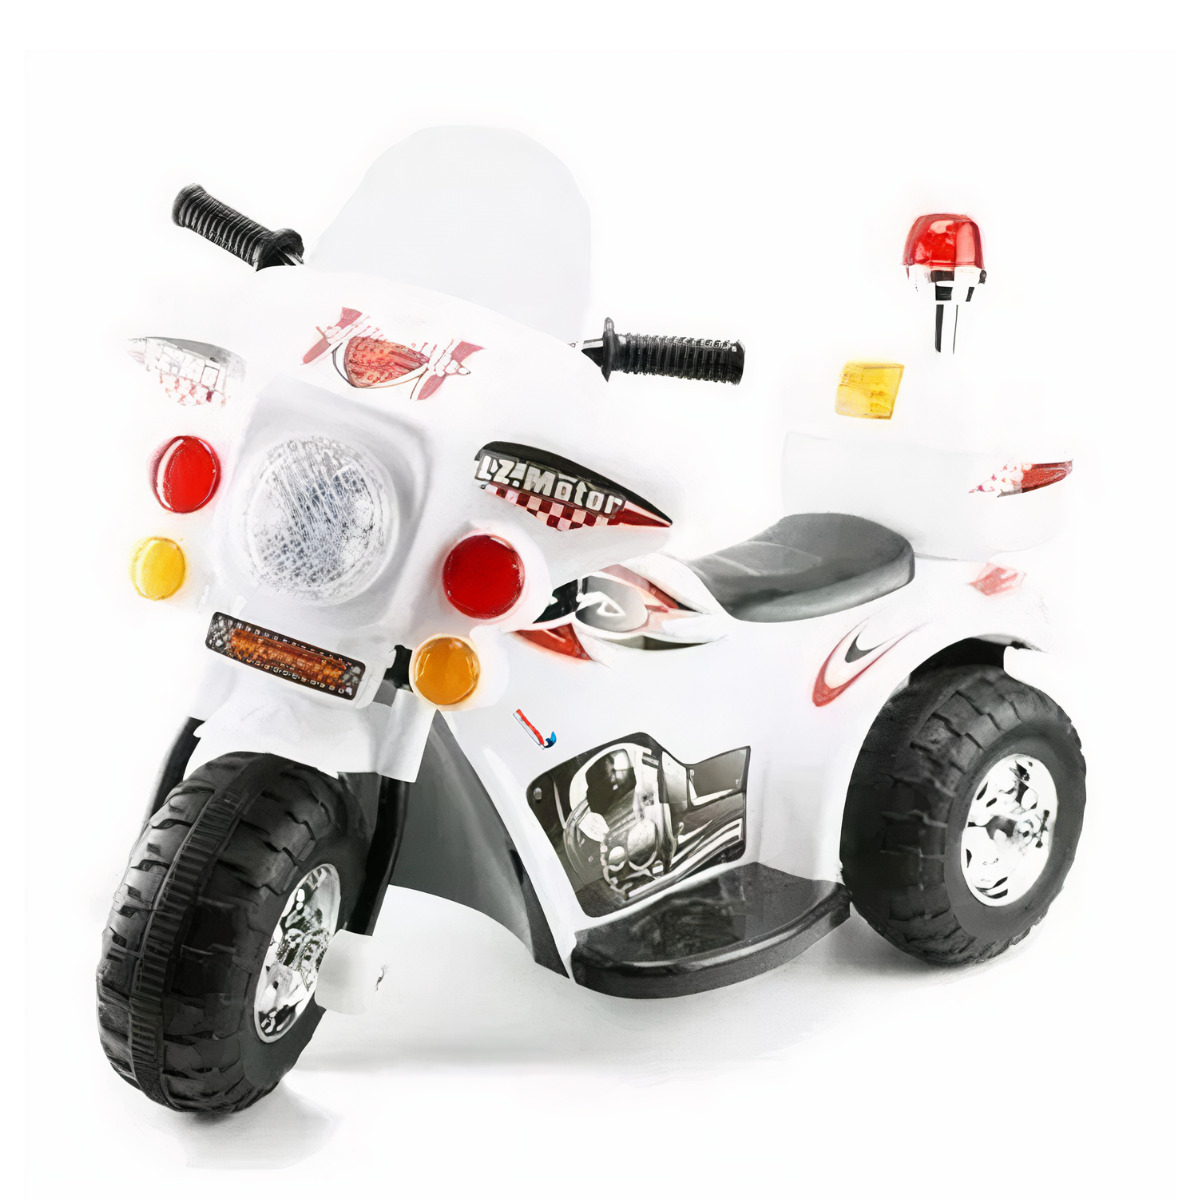 Mini Moto Motinha Infantil Elétrica